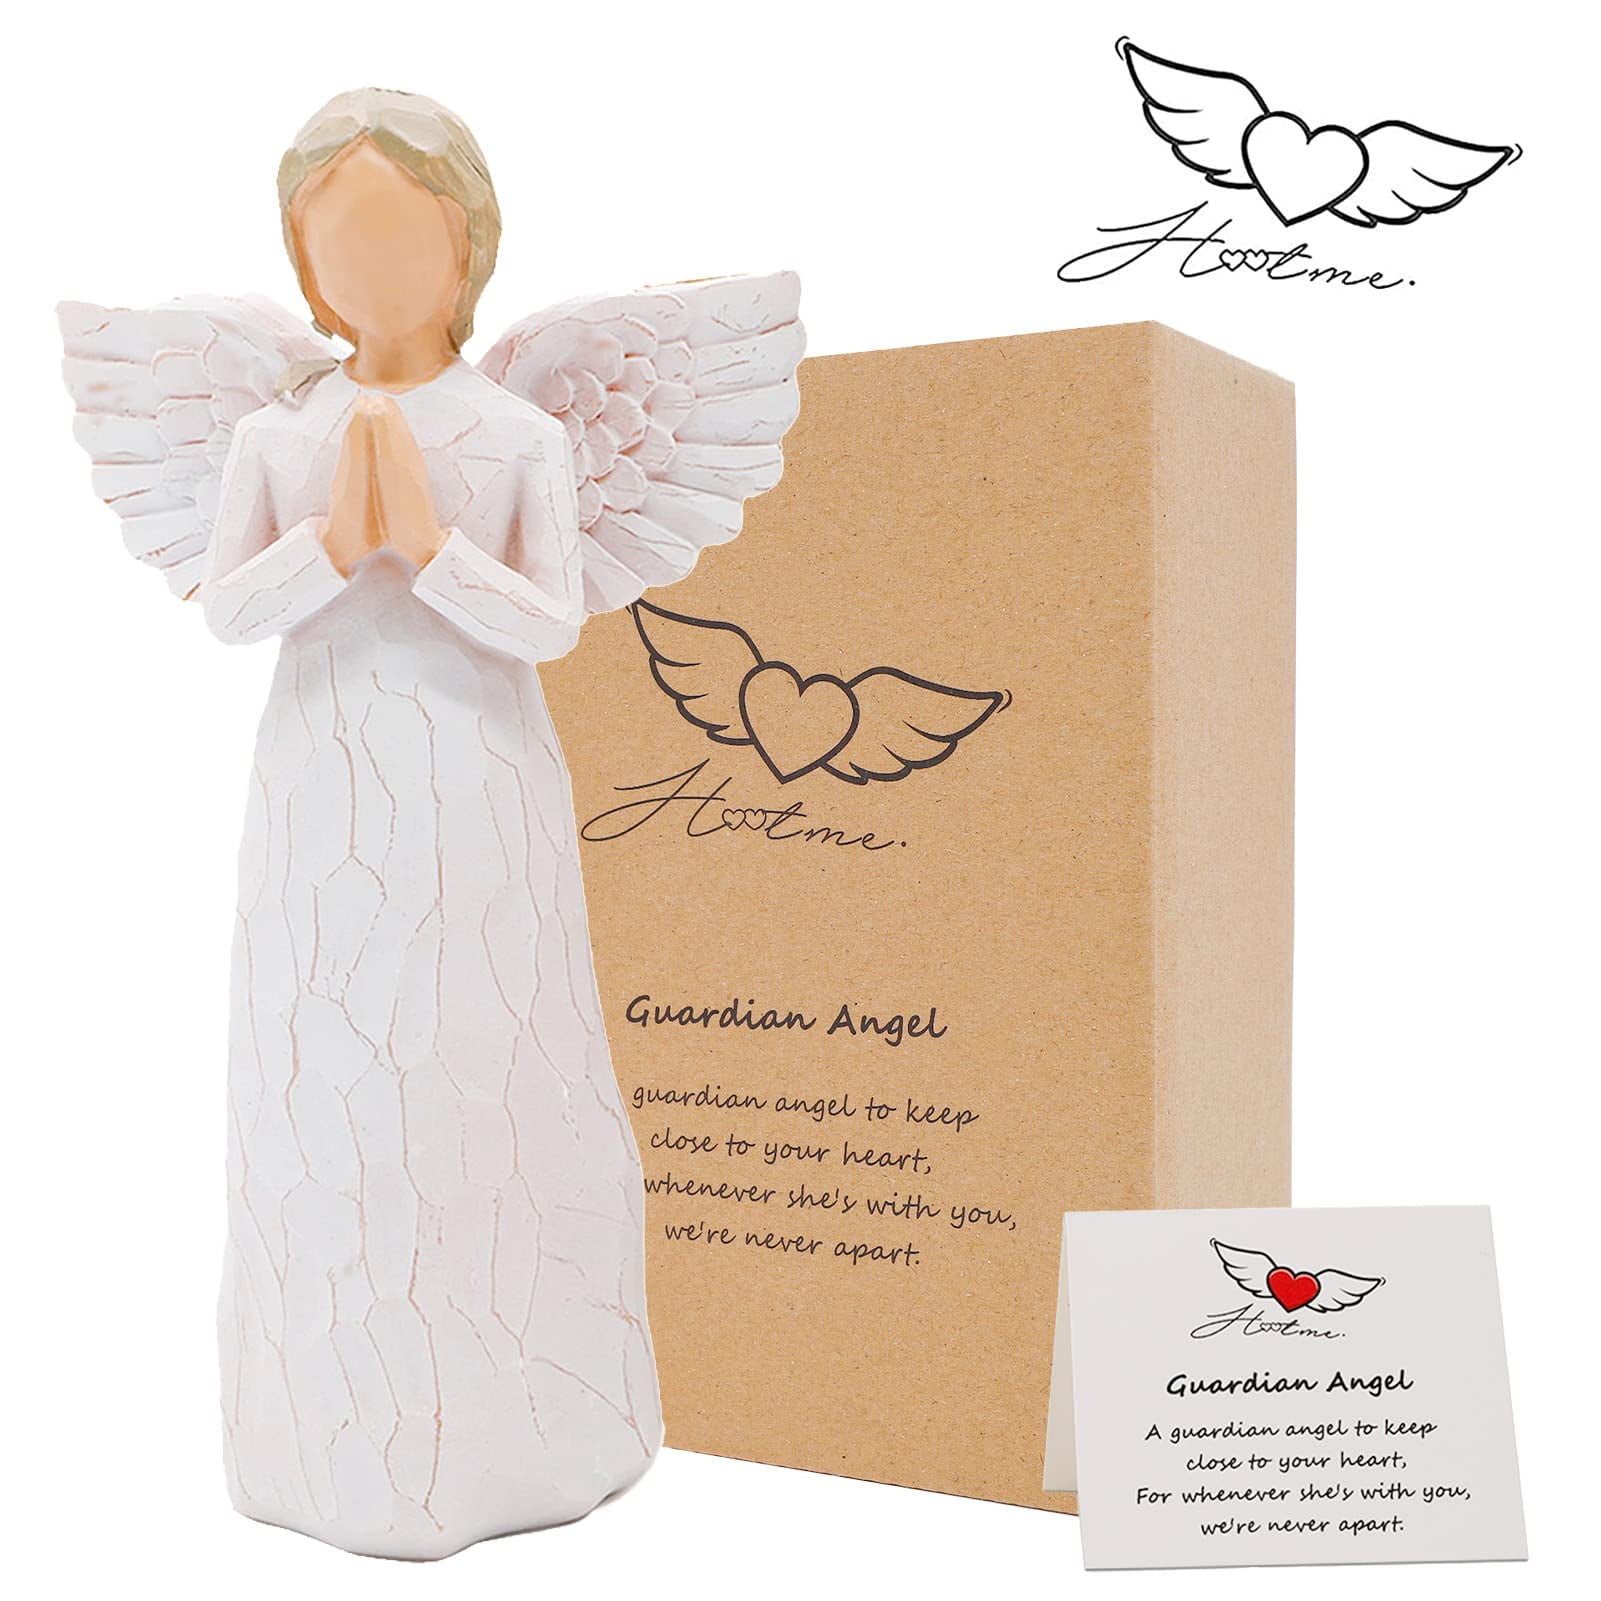 Angel of Prayer Bereavement Friendship or Prayer Guardian Angel Figurine Encouragement Present Gift to Show Love Gratitude Sculpted Hand-Painted Figure Sympathy